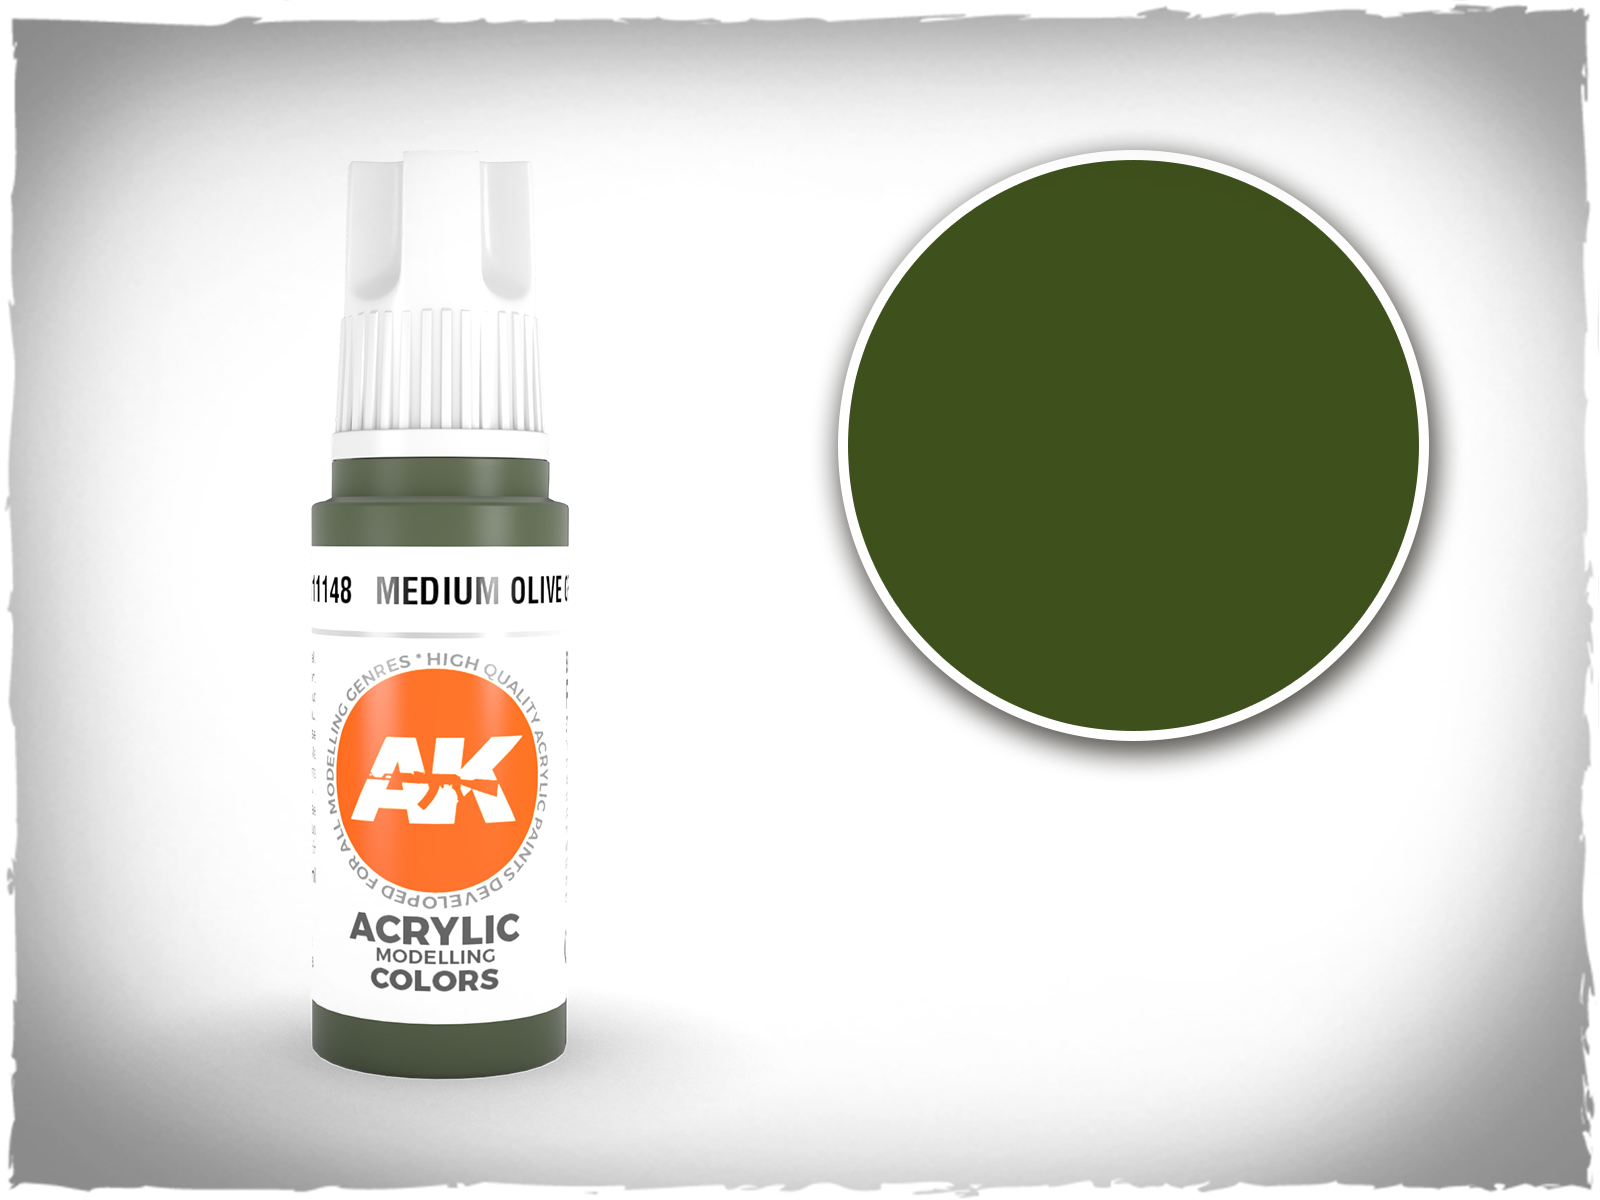 AK acrylic colors 3rd gen - AK11148 - Medium Olive Green | DeepCut Studio